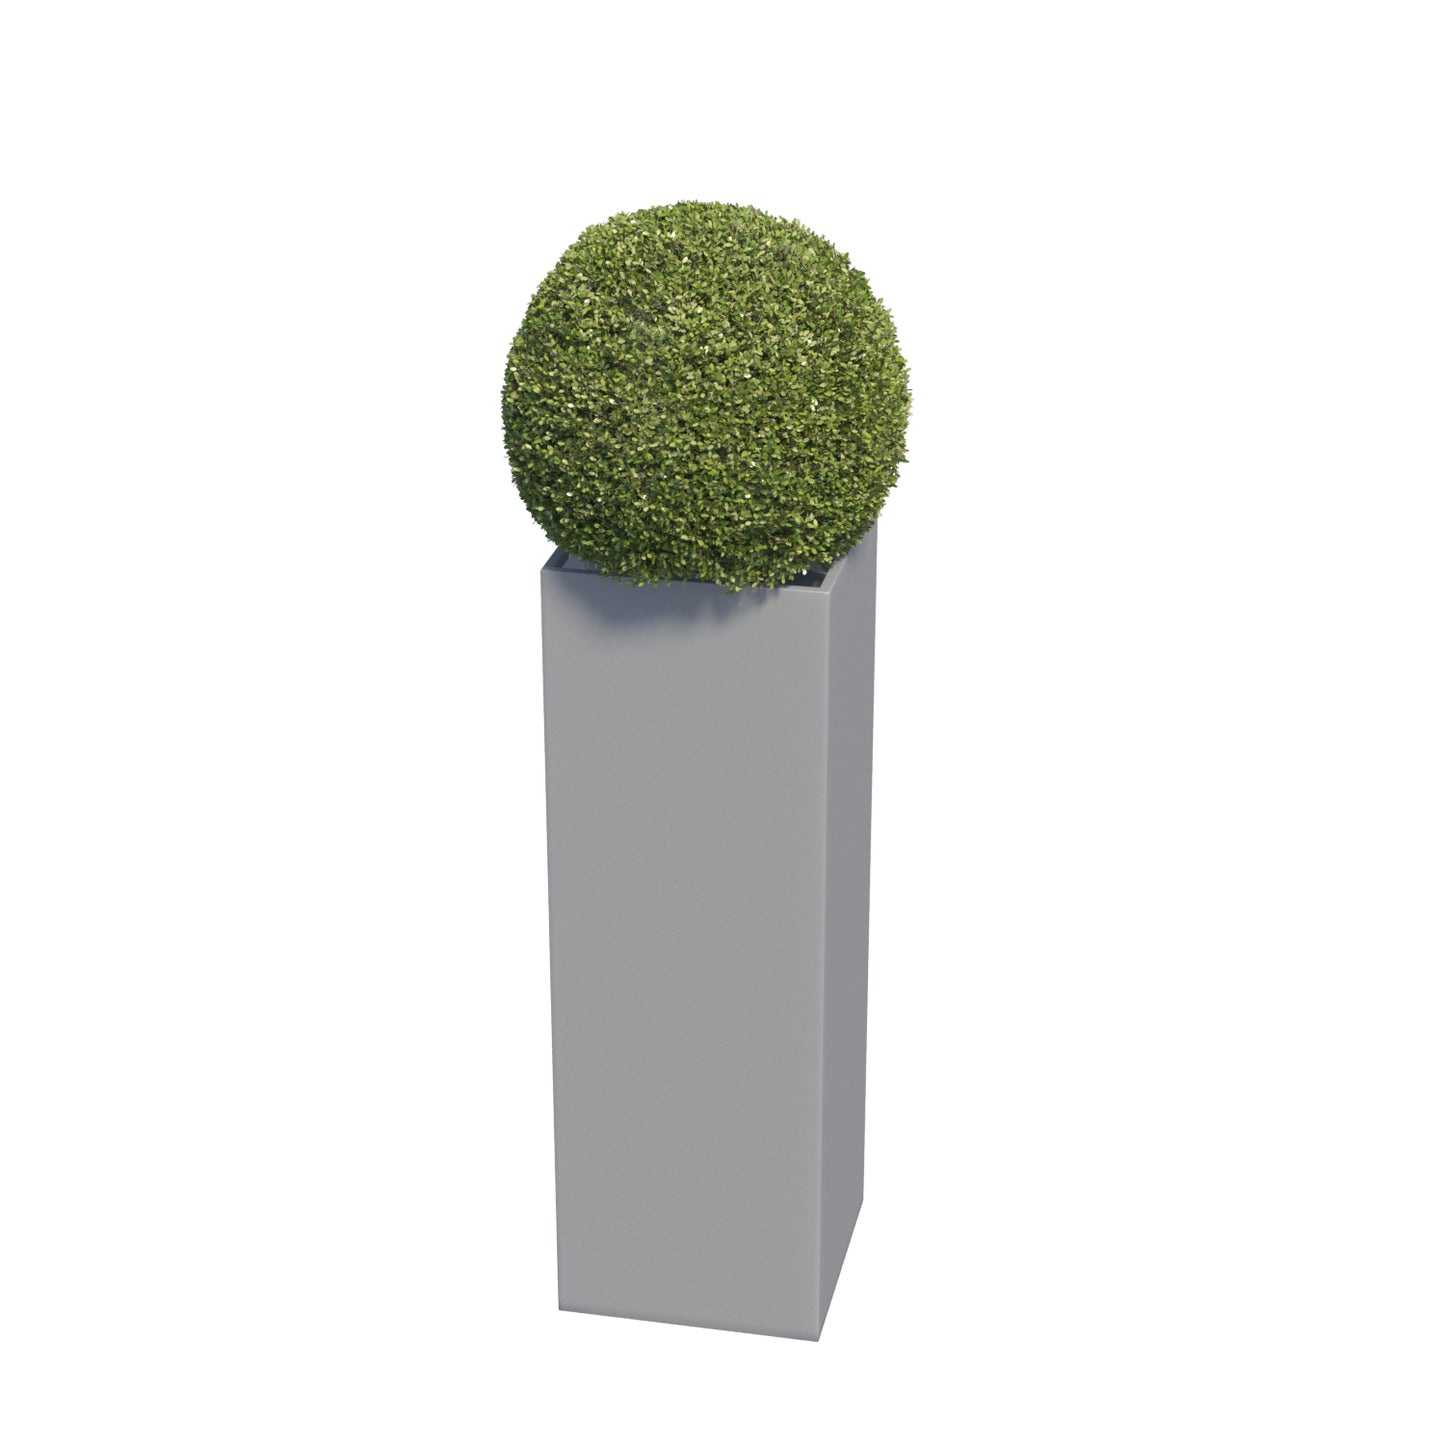 SKINNY PILLAR - Contemporary, designer planter in high durability colors